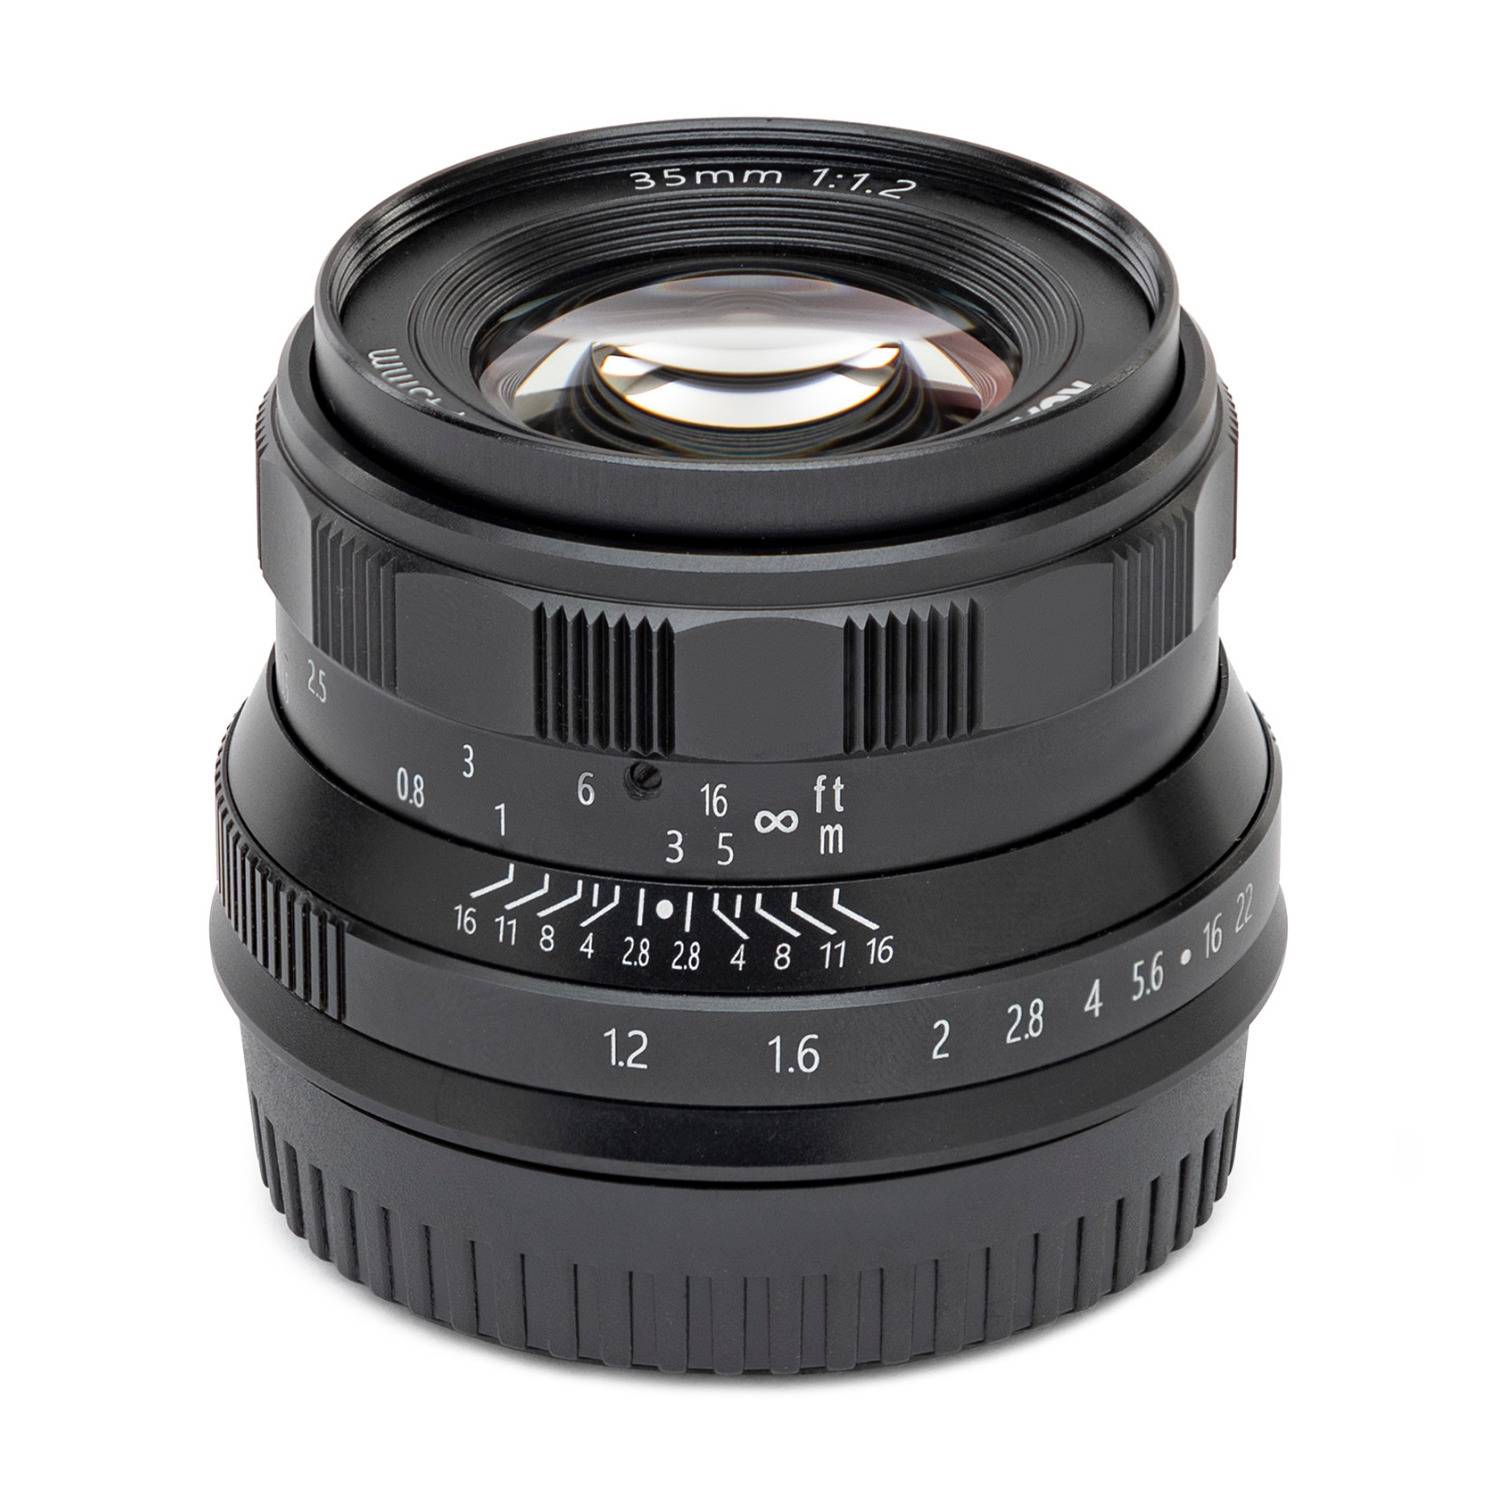 Koah Artisans Series 35mm f/1.2 Large Aperture Manual Focus Lens for Micro Four Thirds (Black)